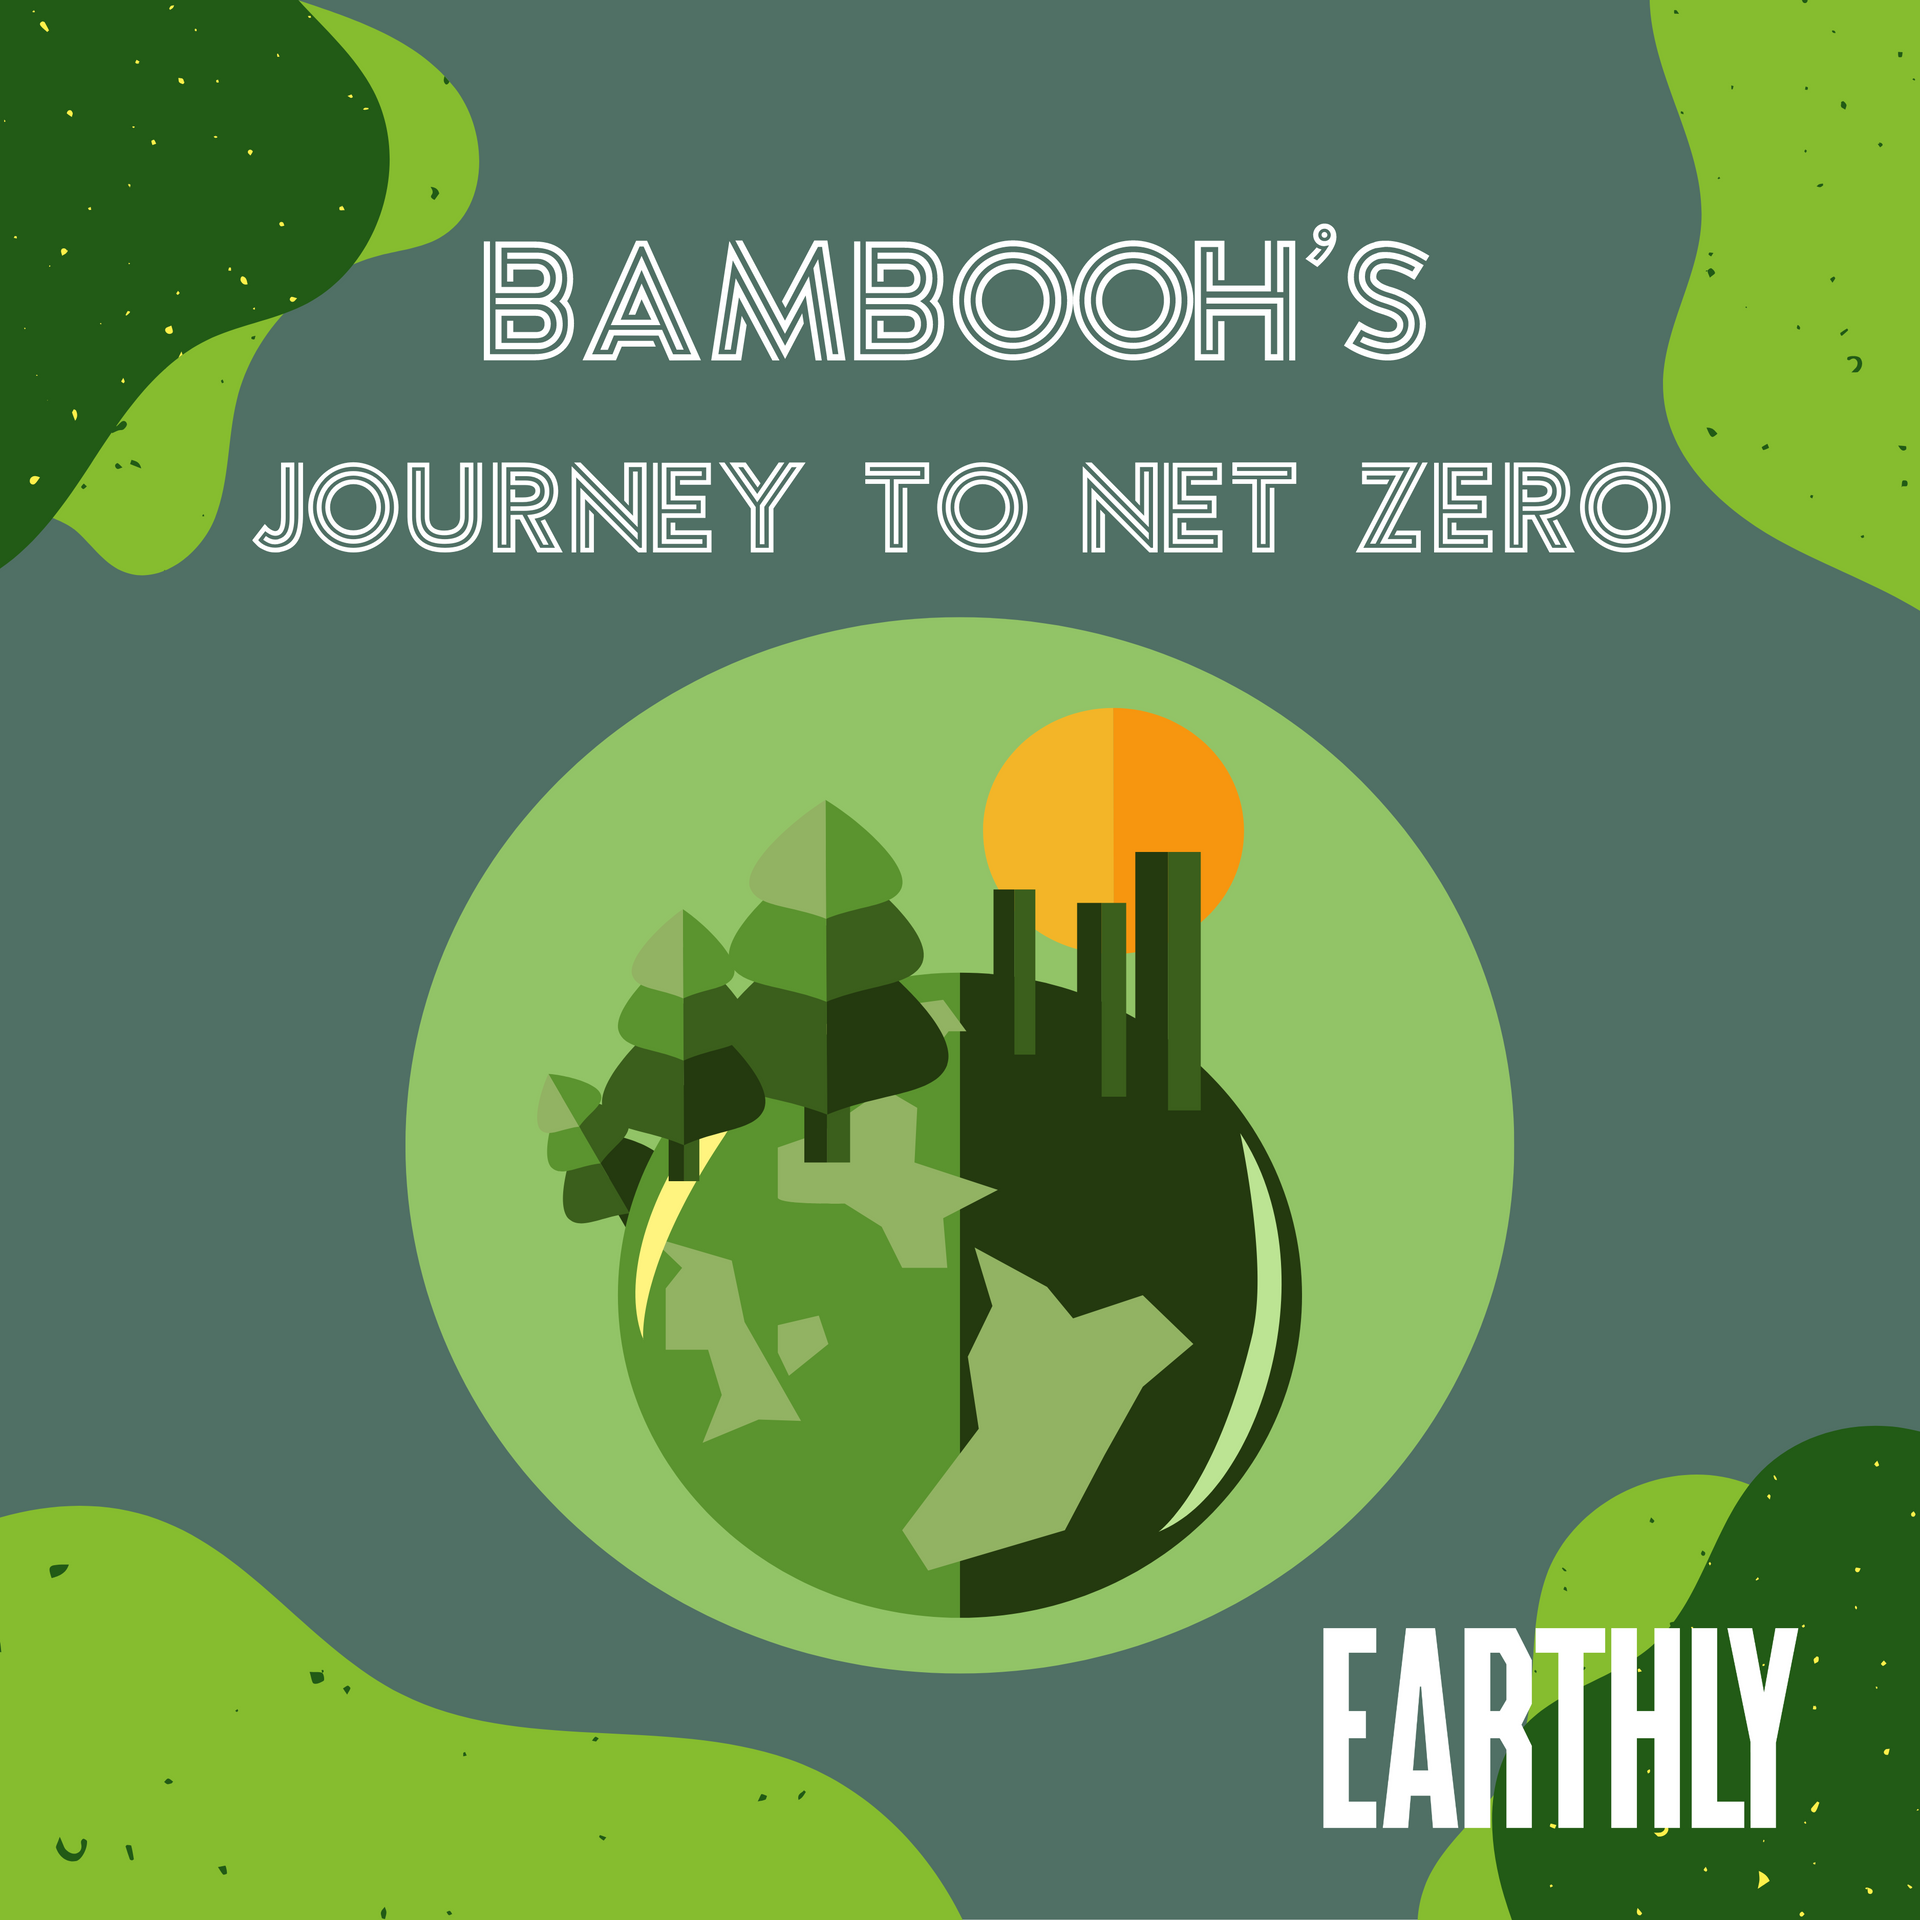 Bambooh's journey to net zero